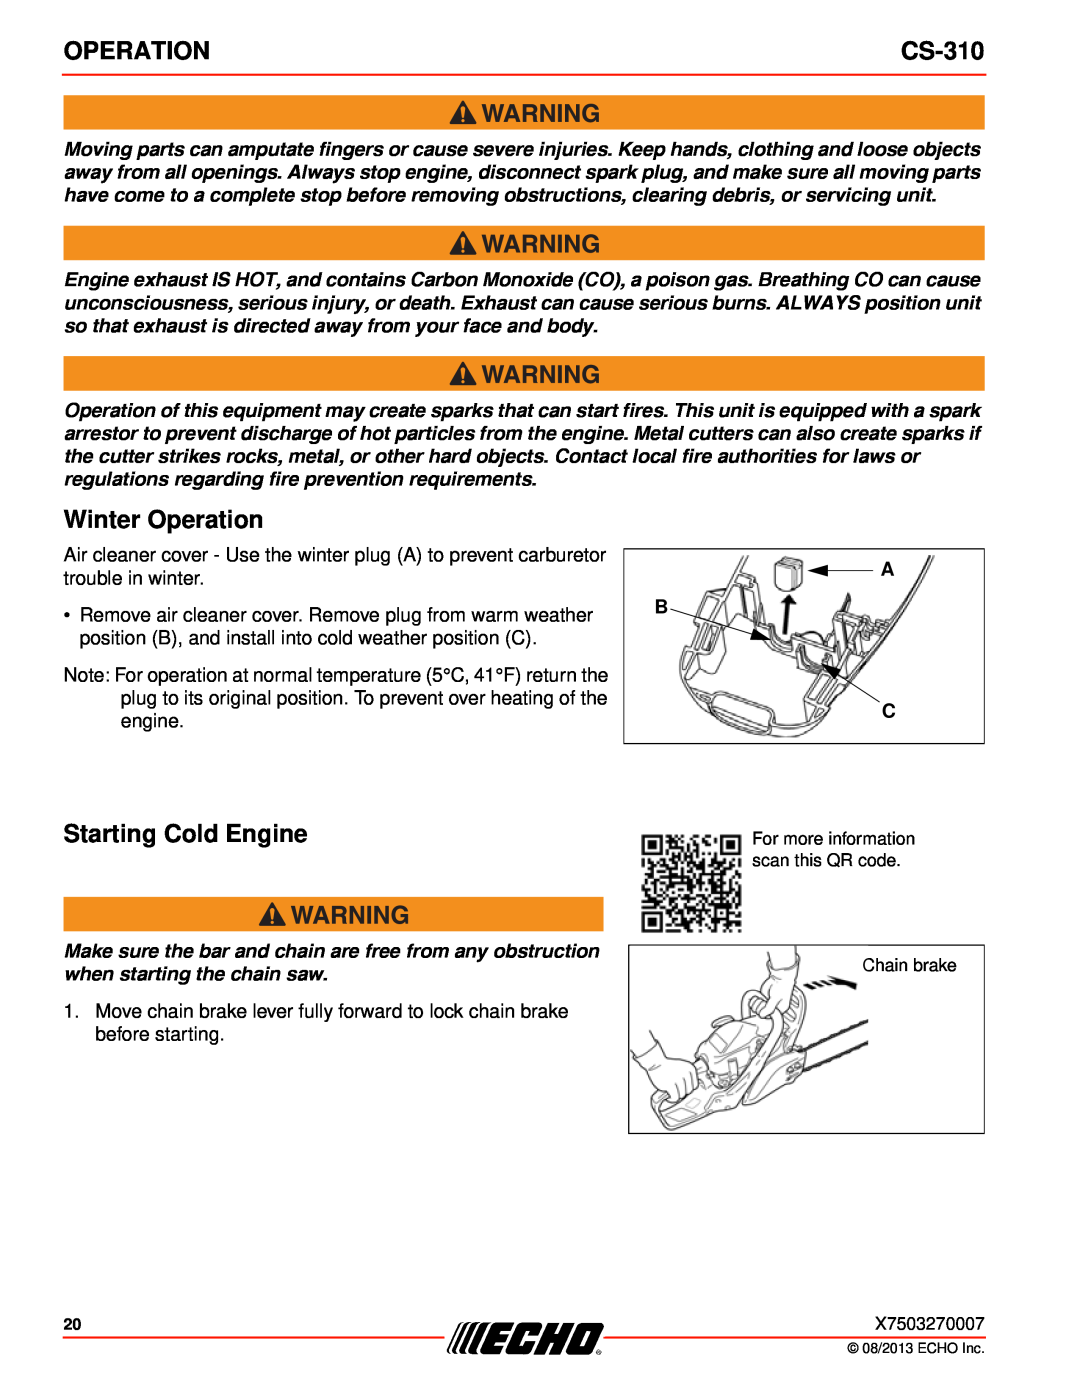 Echo CS-310 instruction manual Winter Operation, Starting Cold Engine 